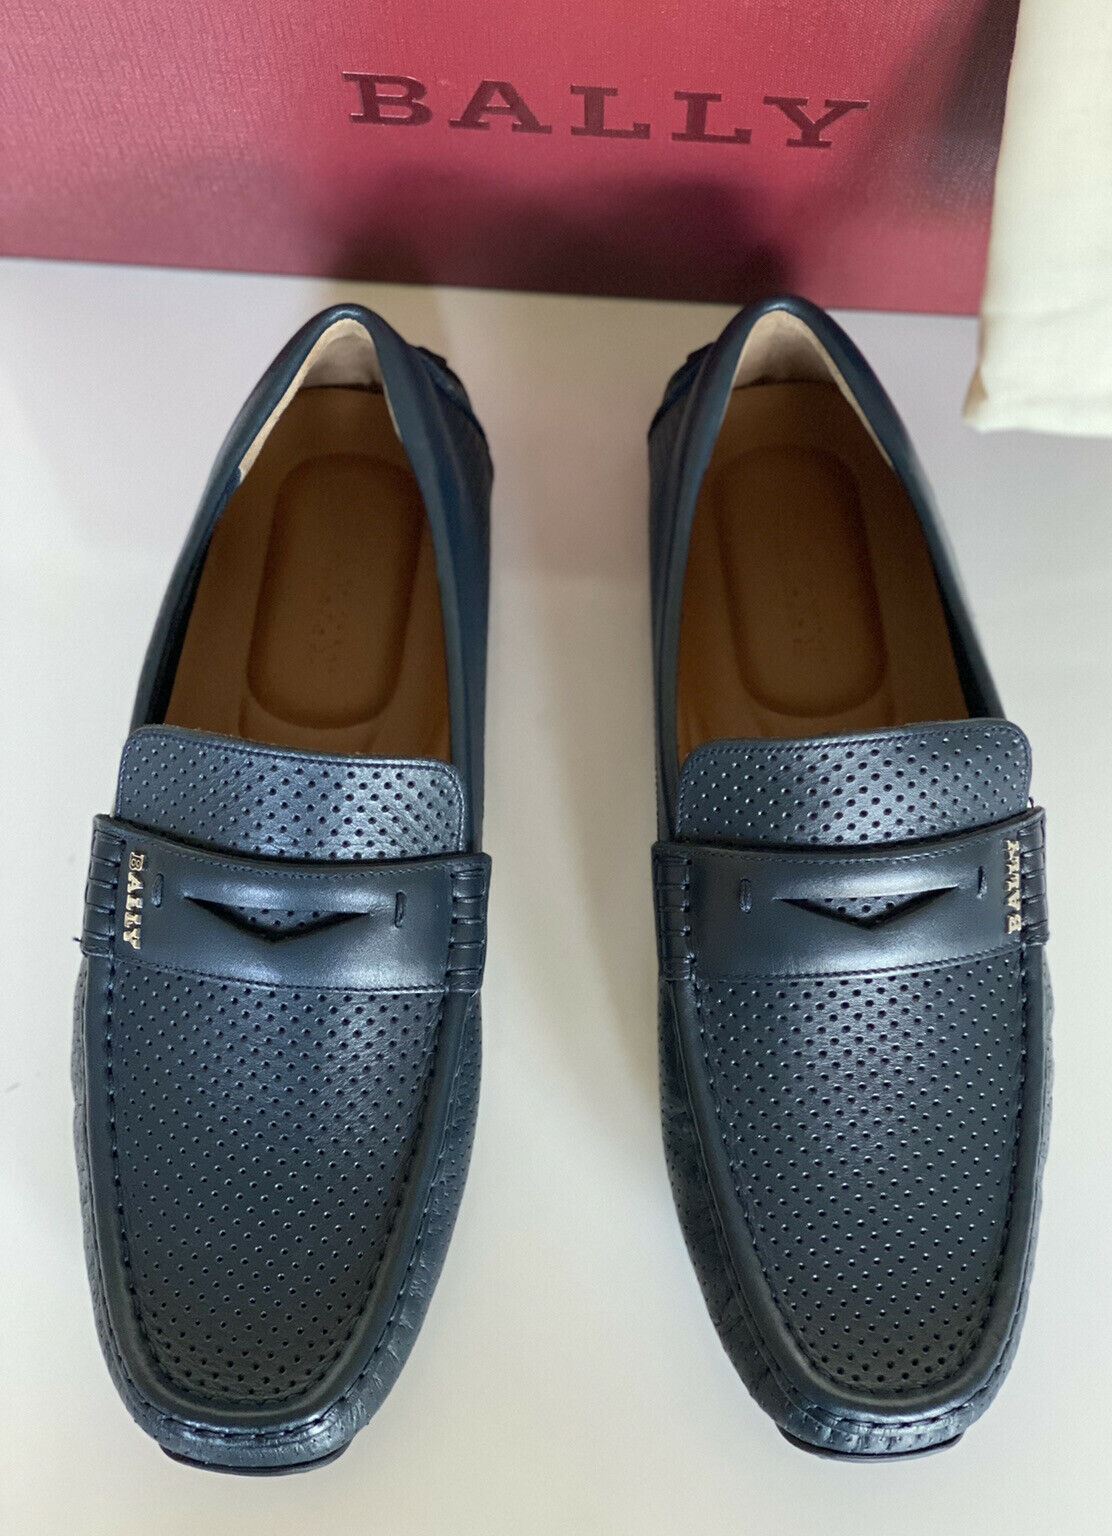 NIB Bally Herren-Loafer-Schuhe aus perforiertem Kalbsleder, Blau, 8 US 6231355 